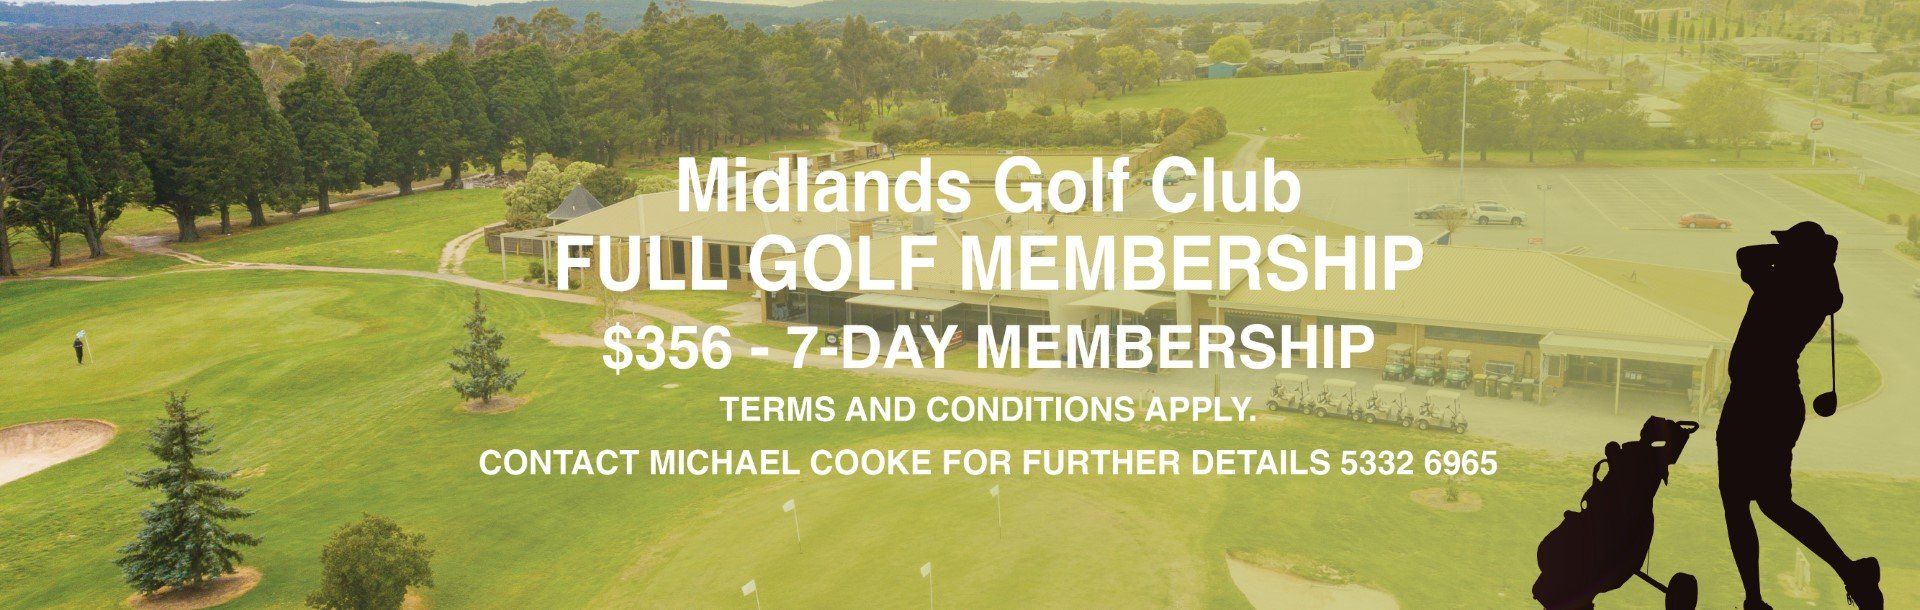 an advertisement for midlands golf club full golf membership